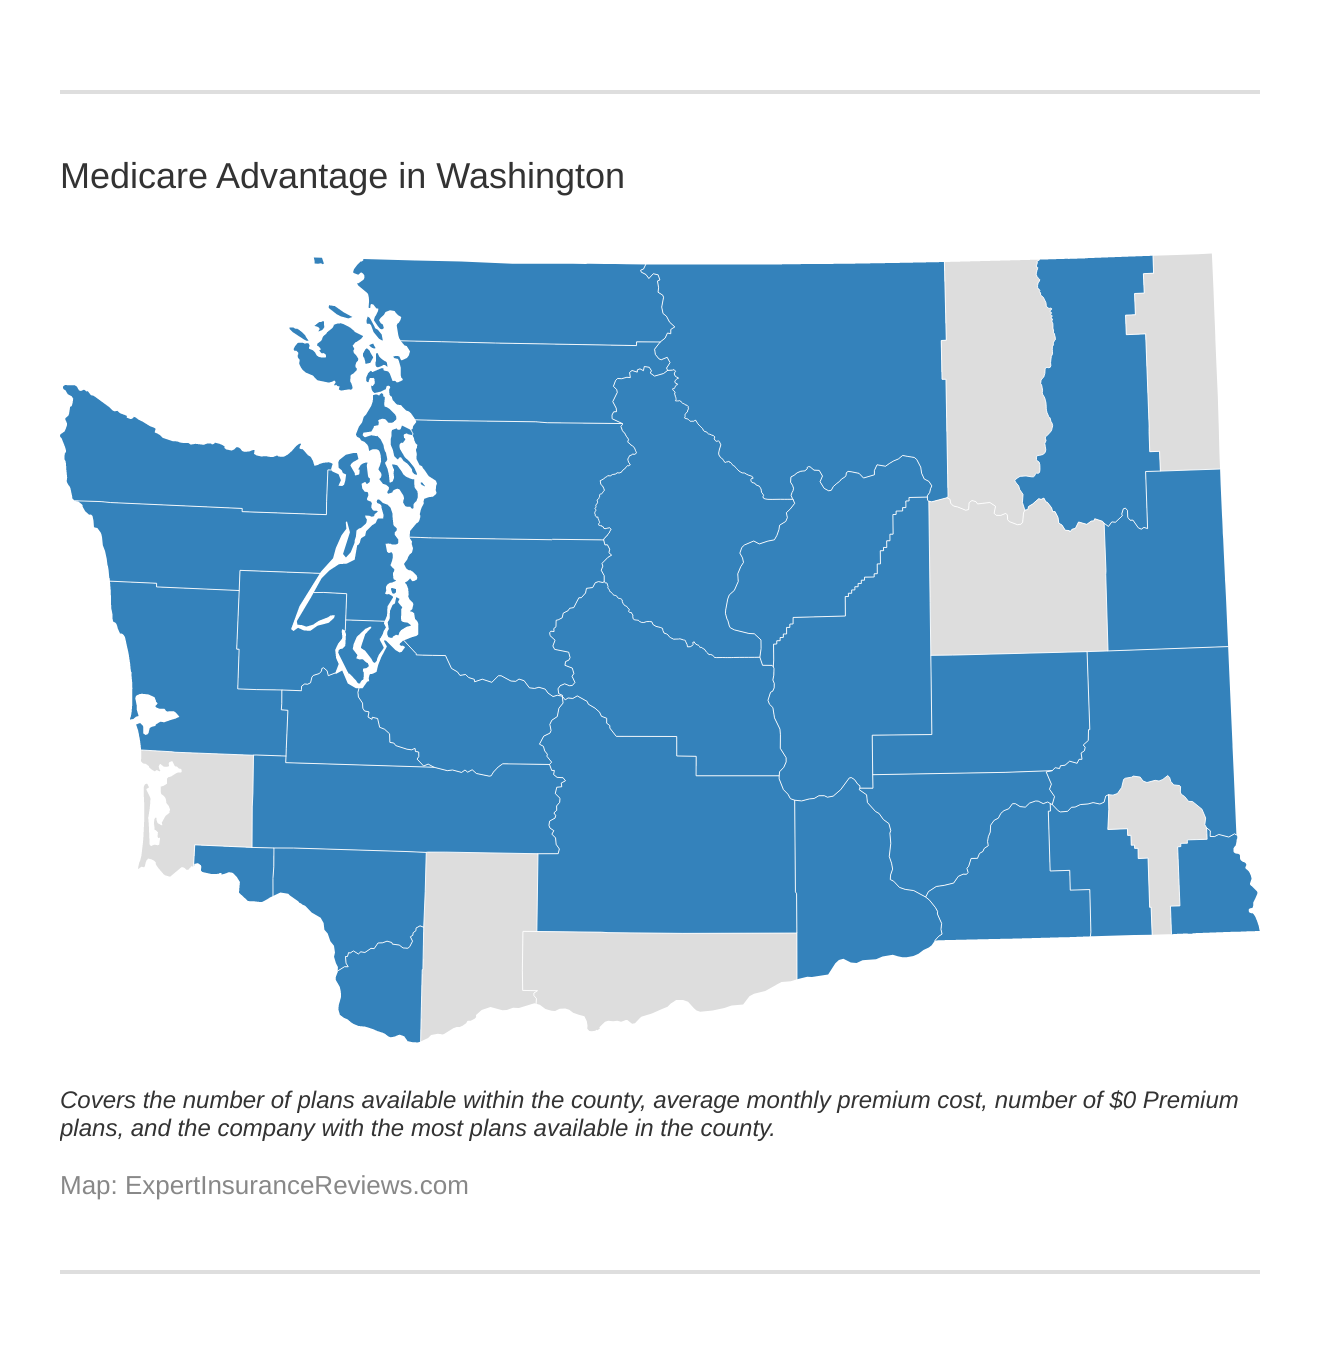 Medicare Advantage in Washington